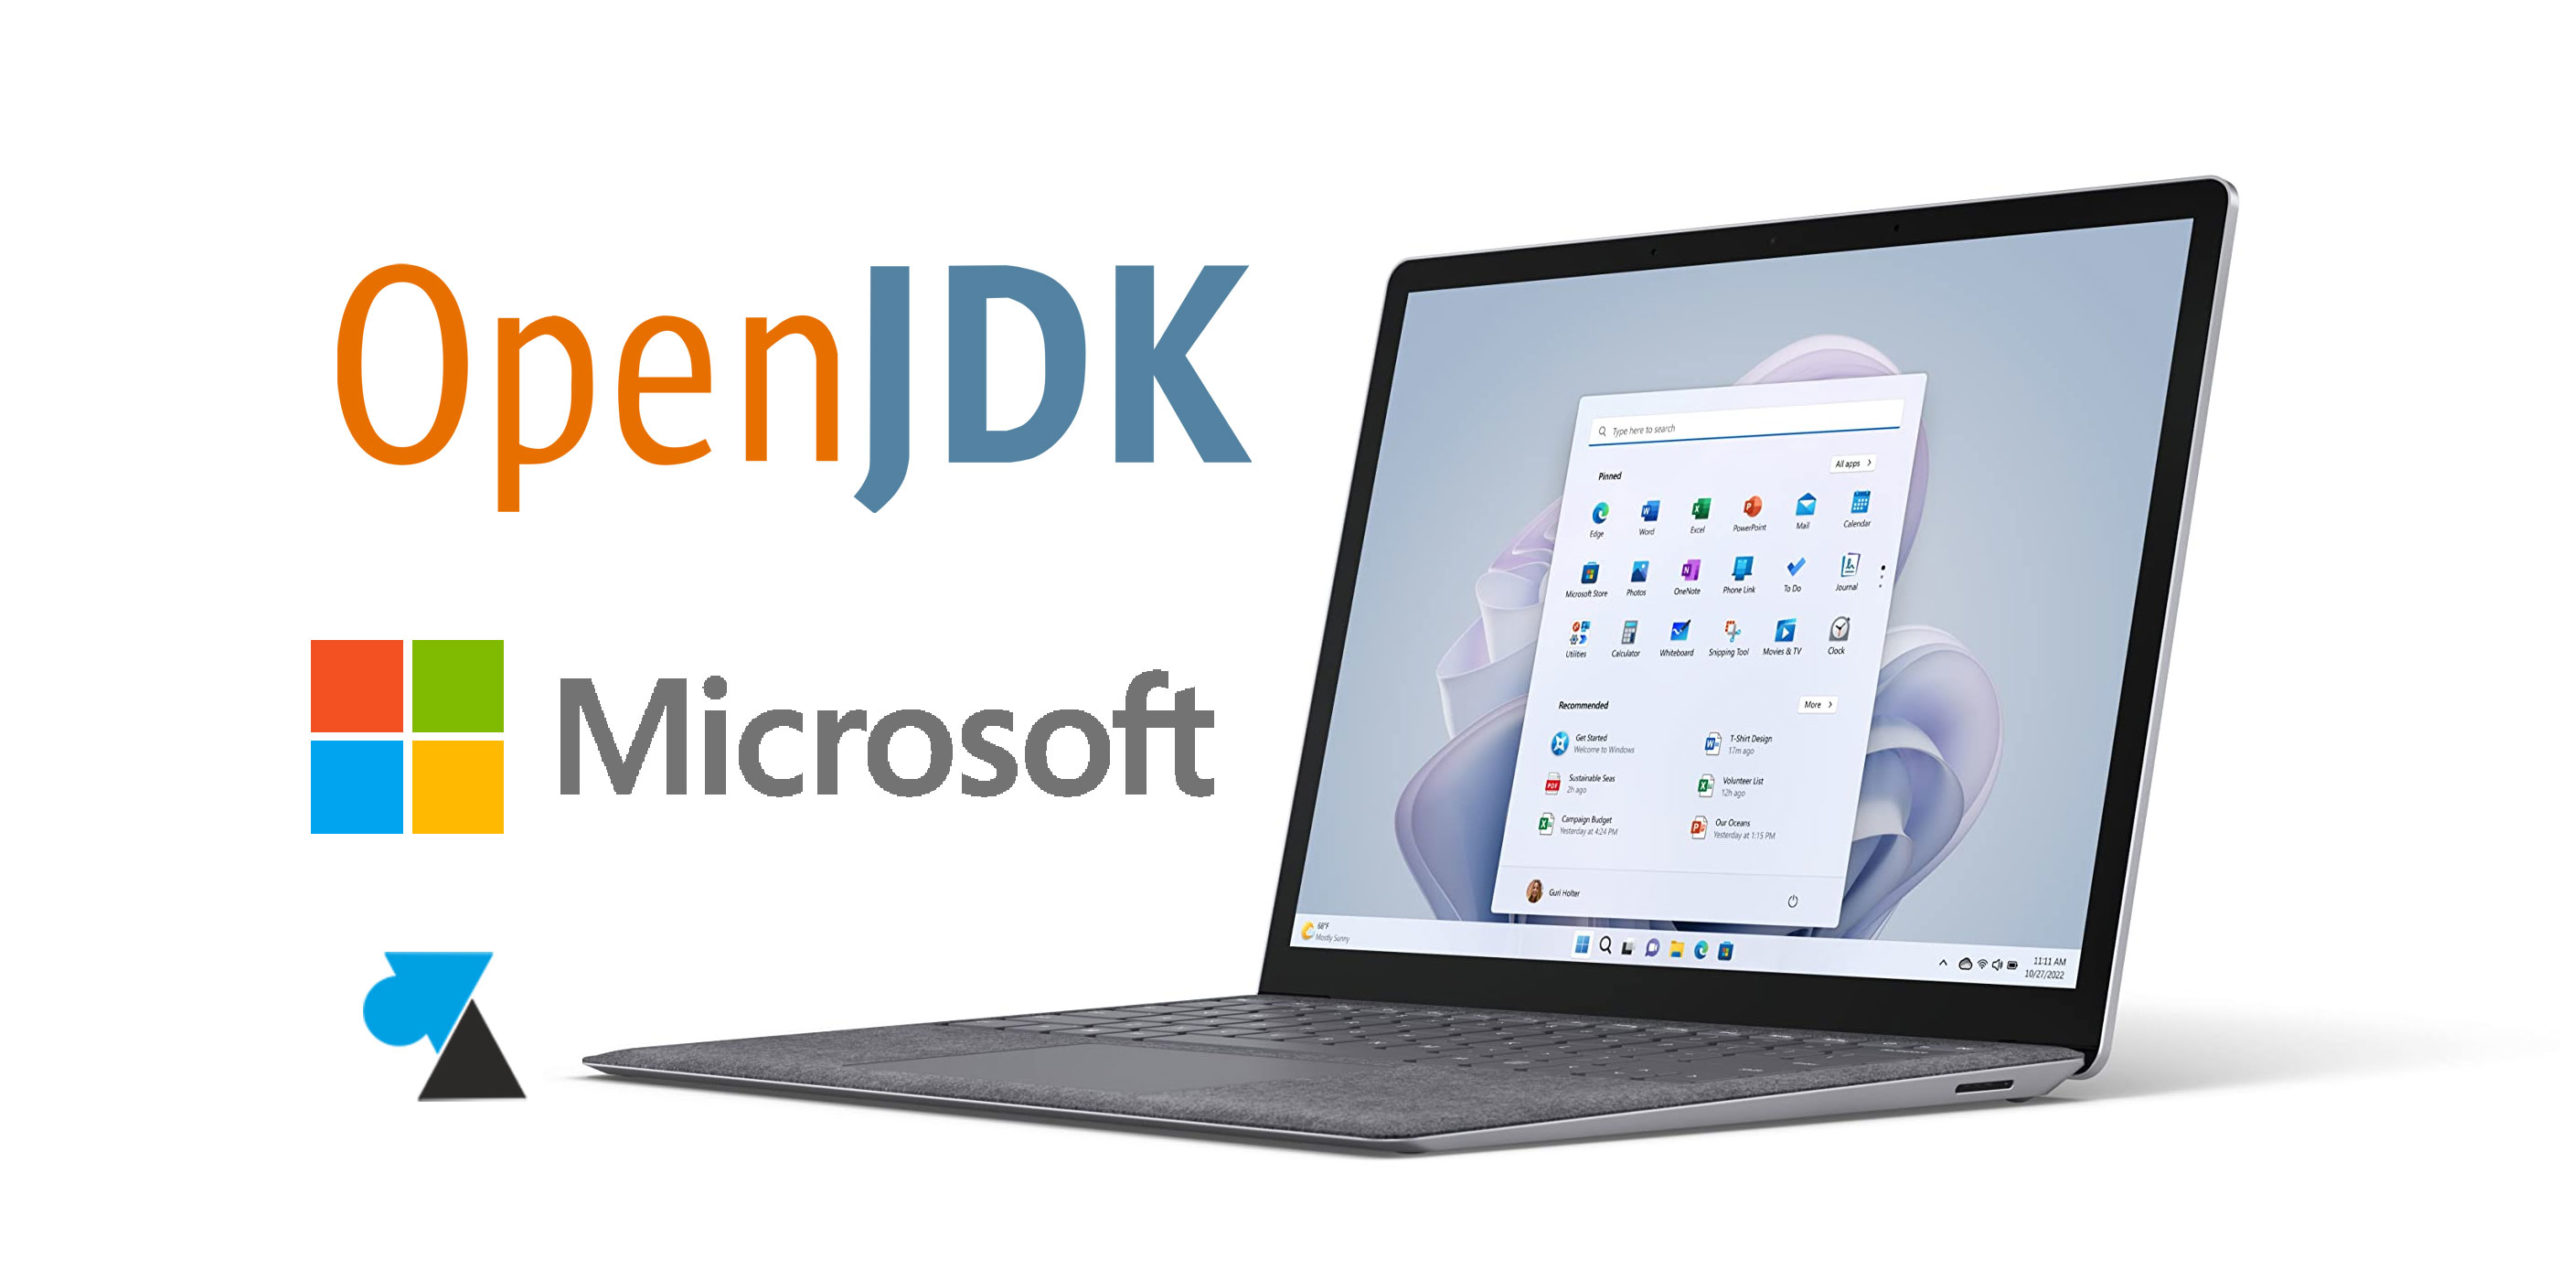 WF OpenJDK Microsoft